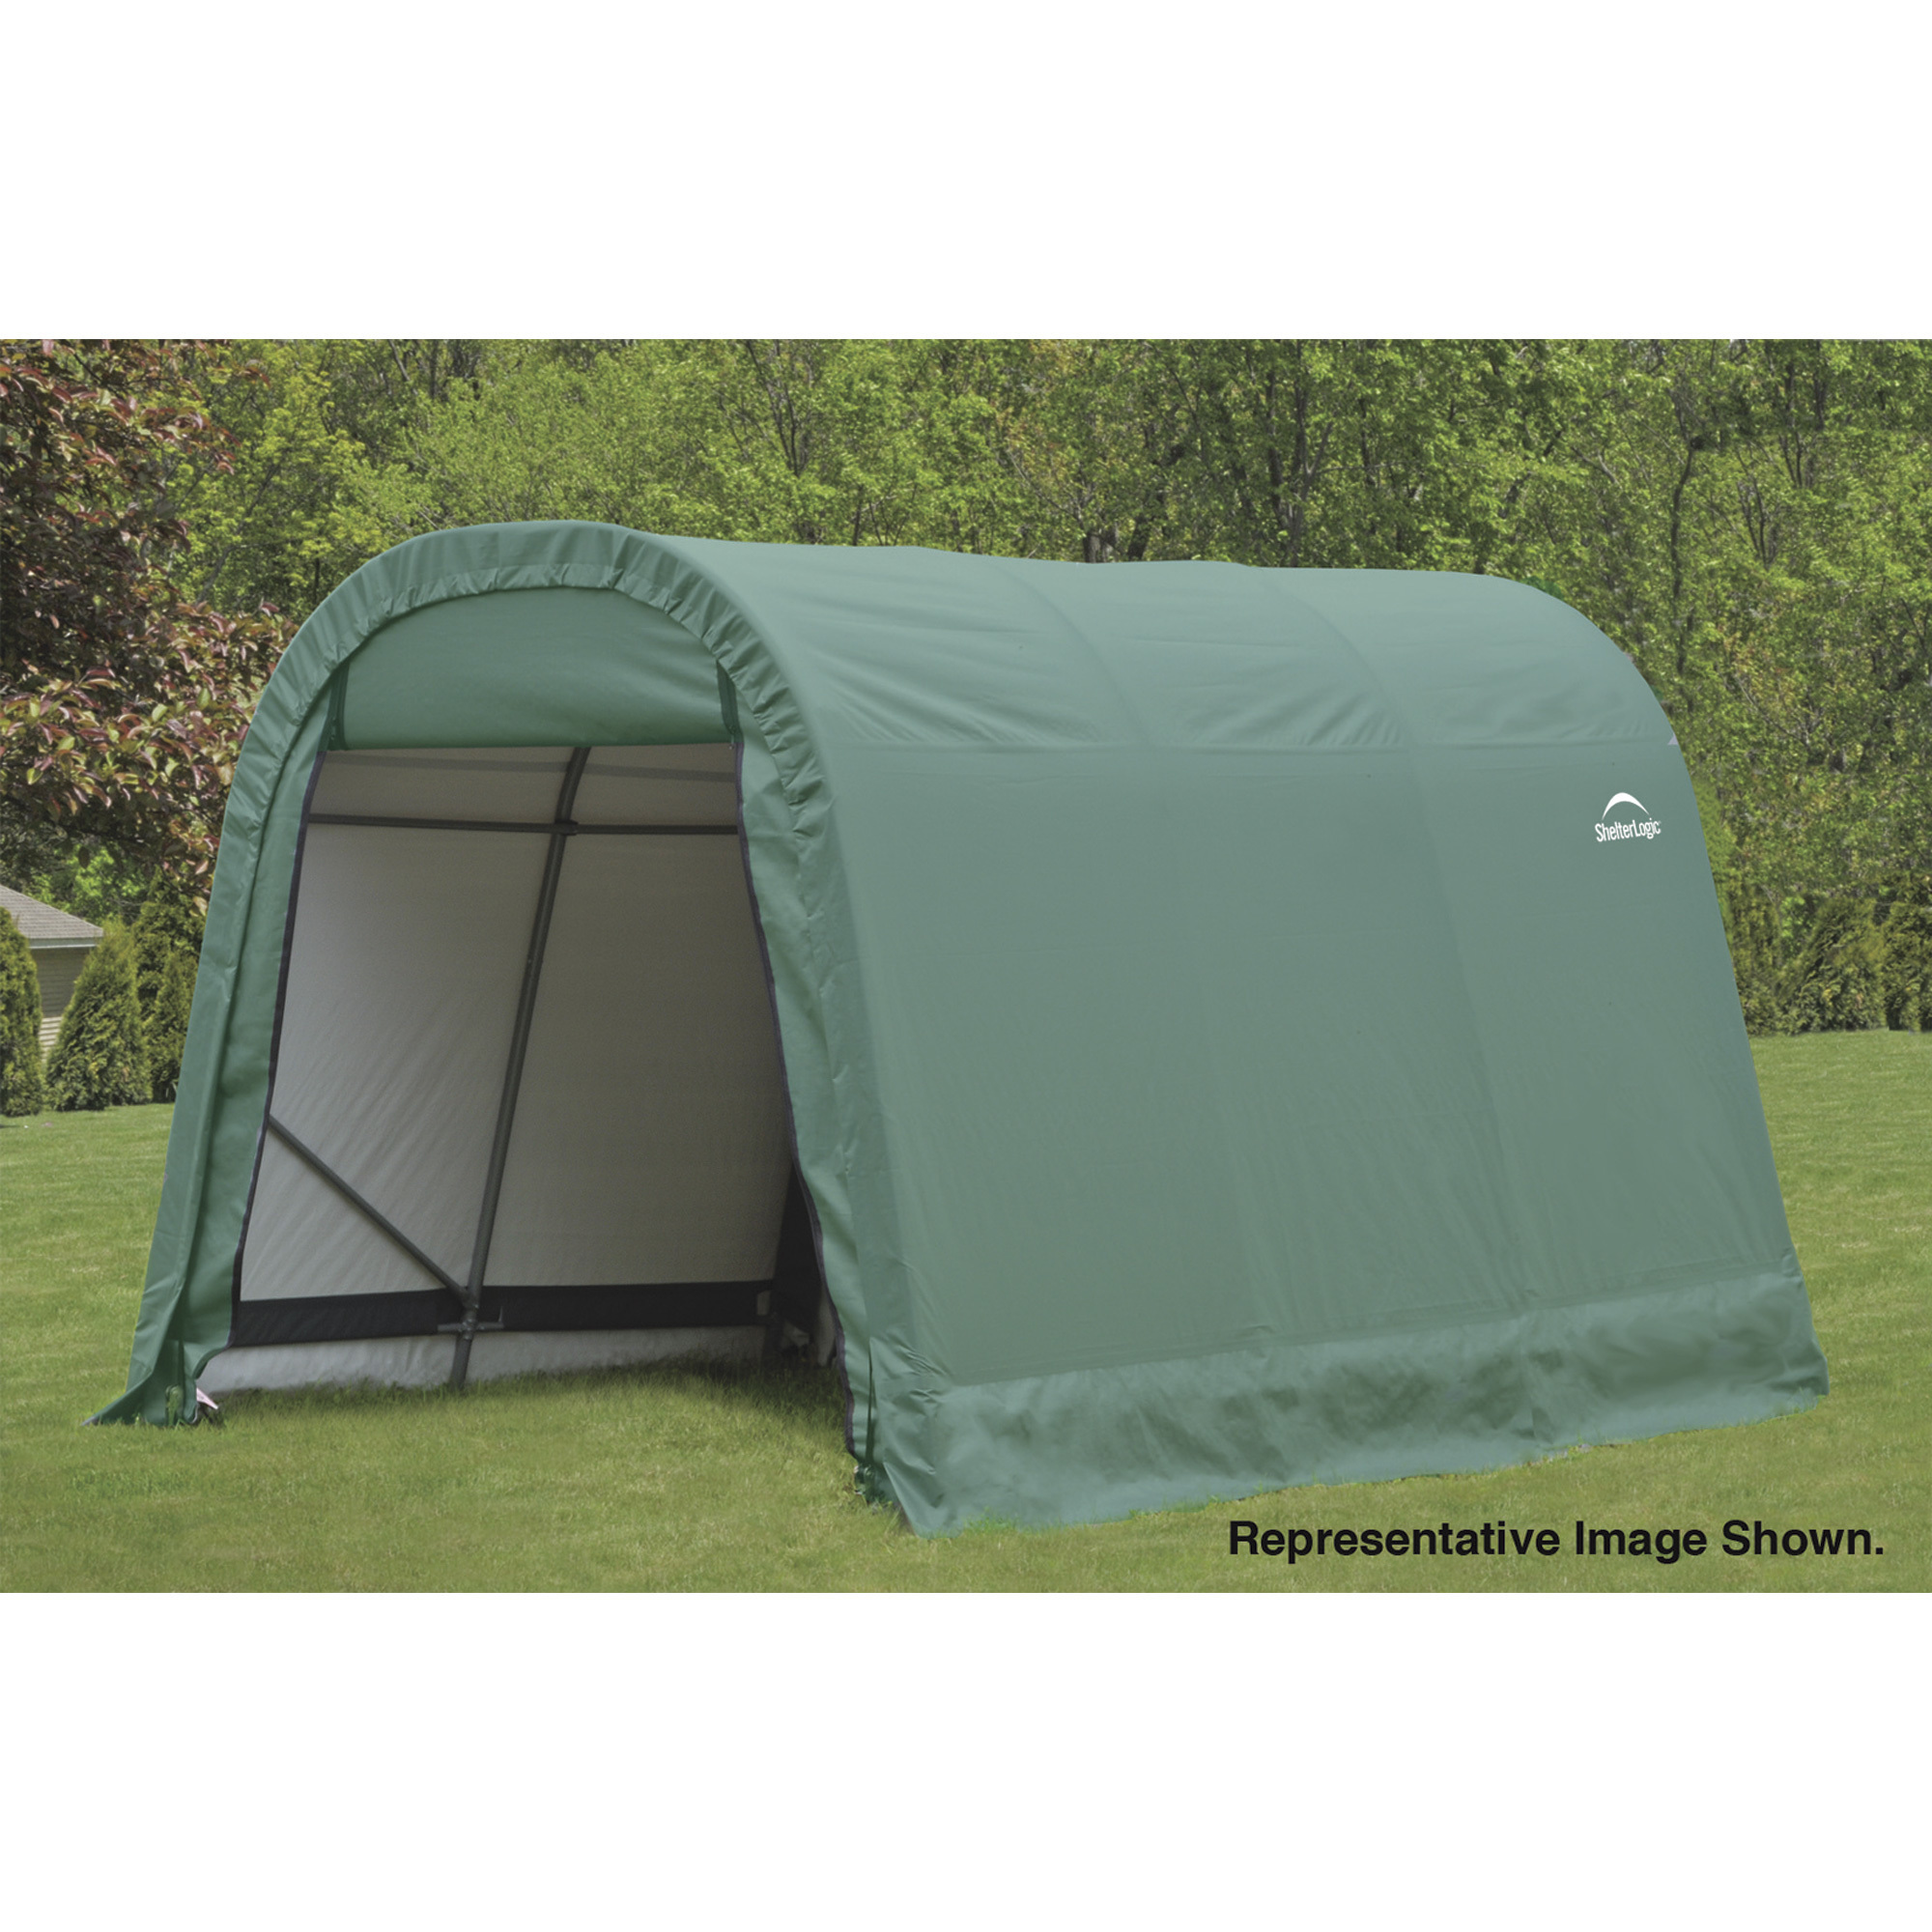 Round Style Shed/Storage Shelter — Green, 12ft.L x 8ft.W x 8ft.H, Model - ShelterLogic 76814